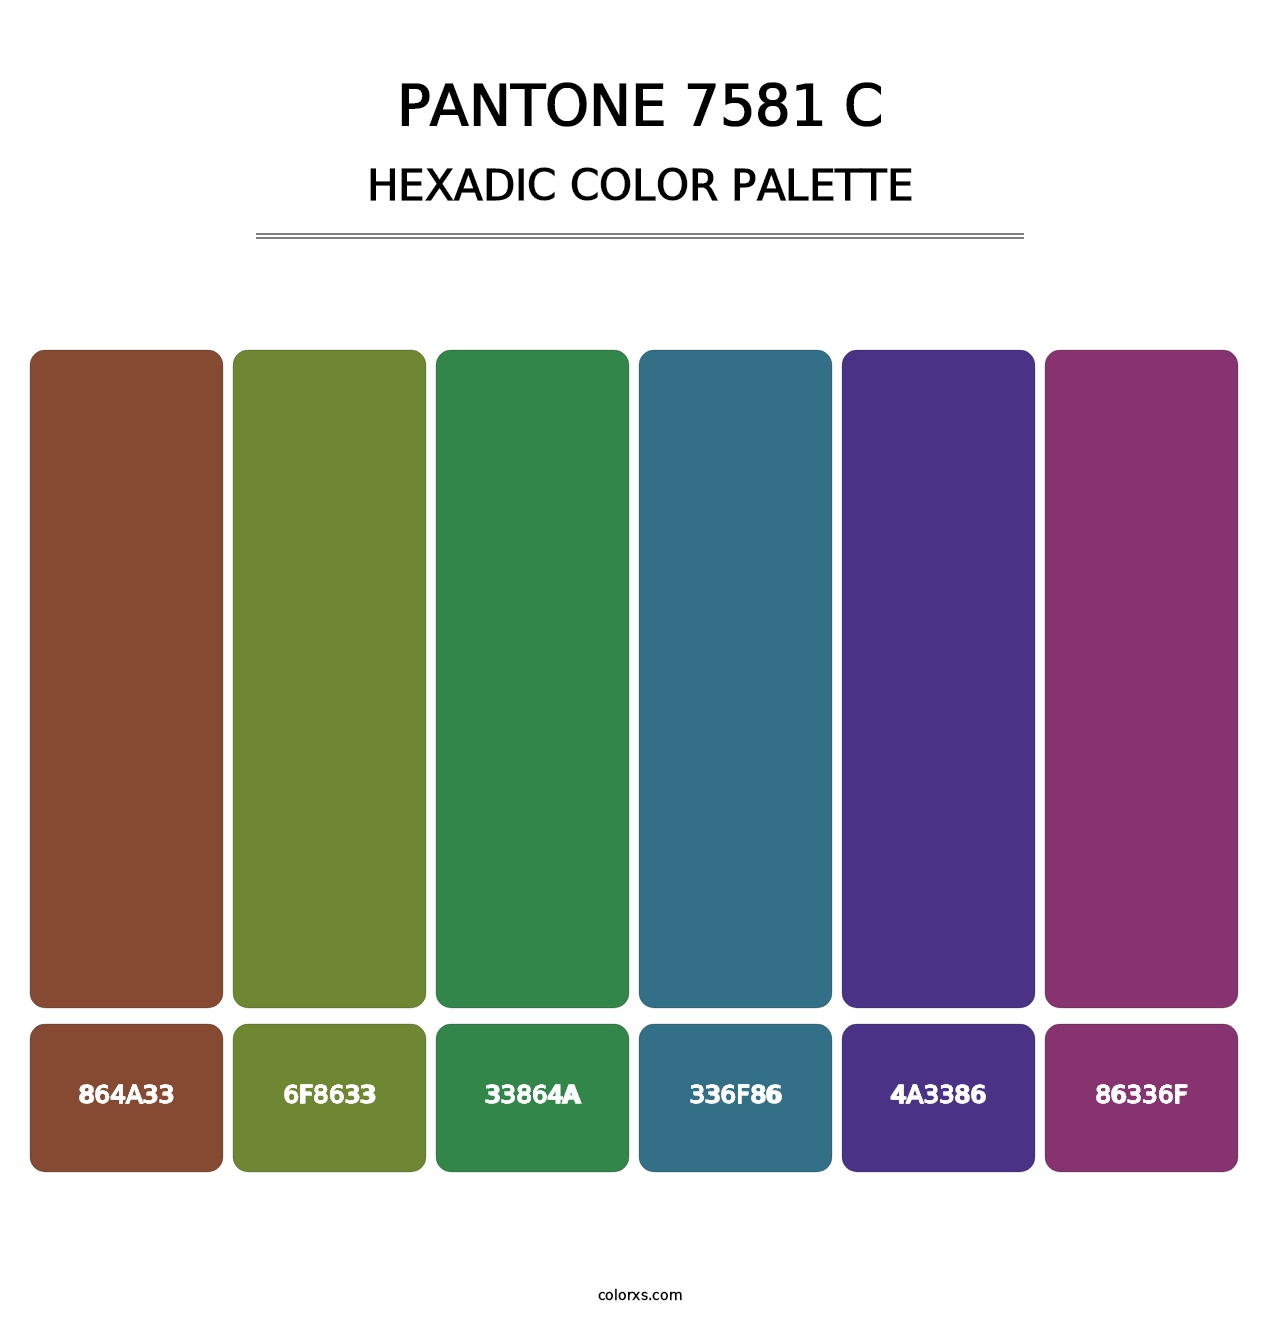 PANTONE 7581 C - Hexadic Color Palette